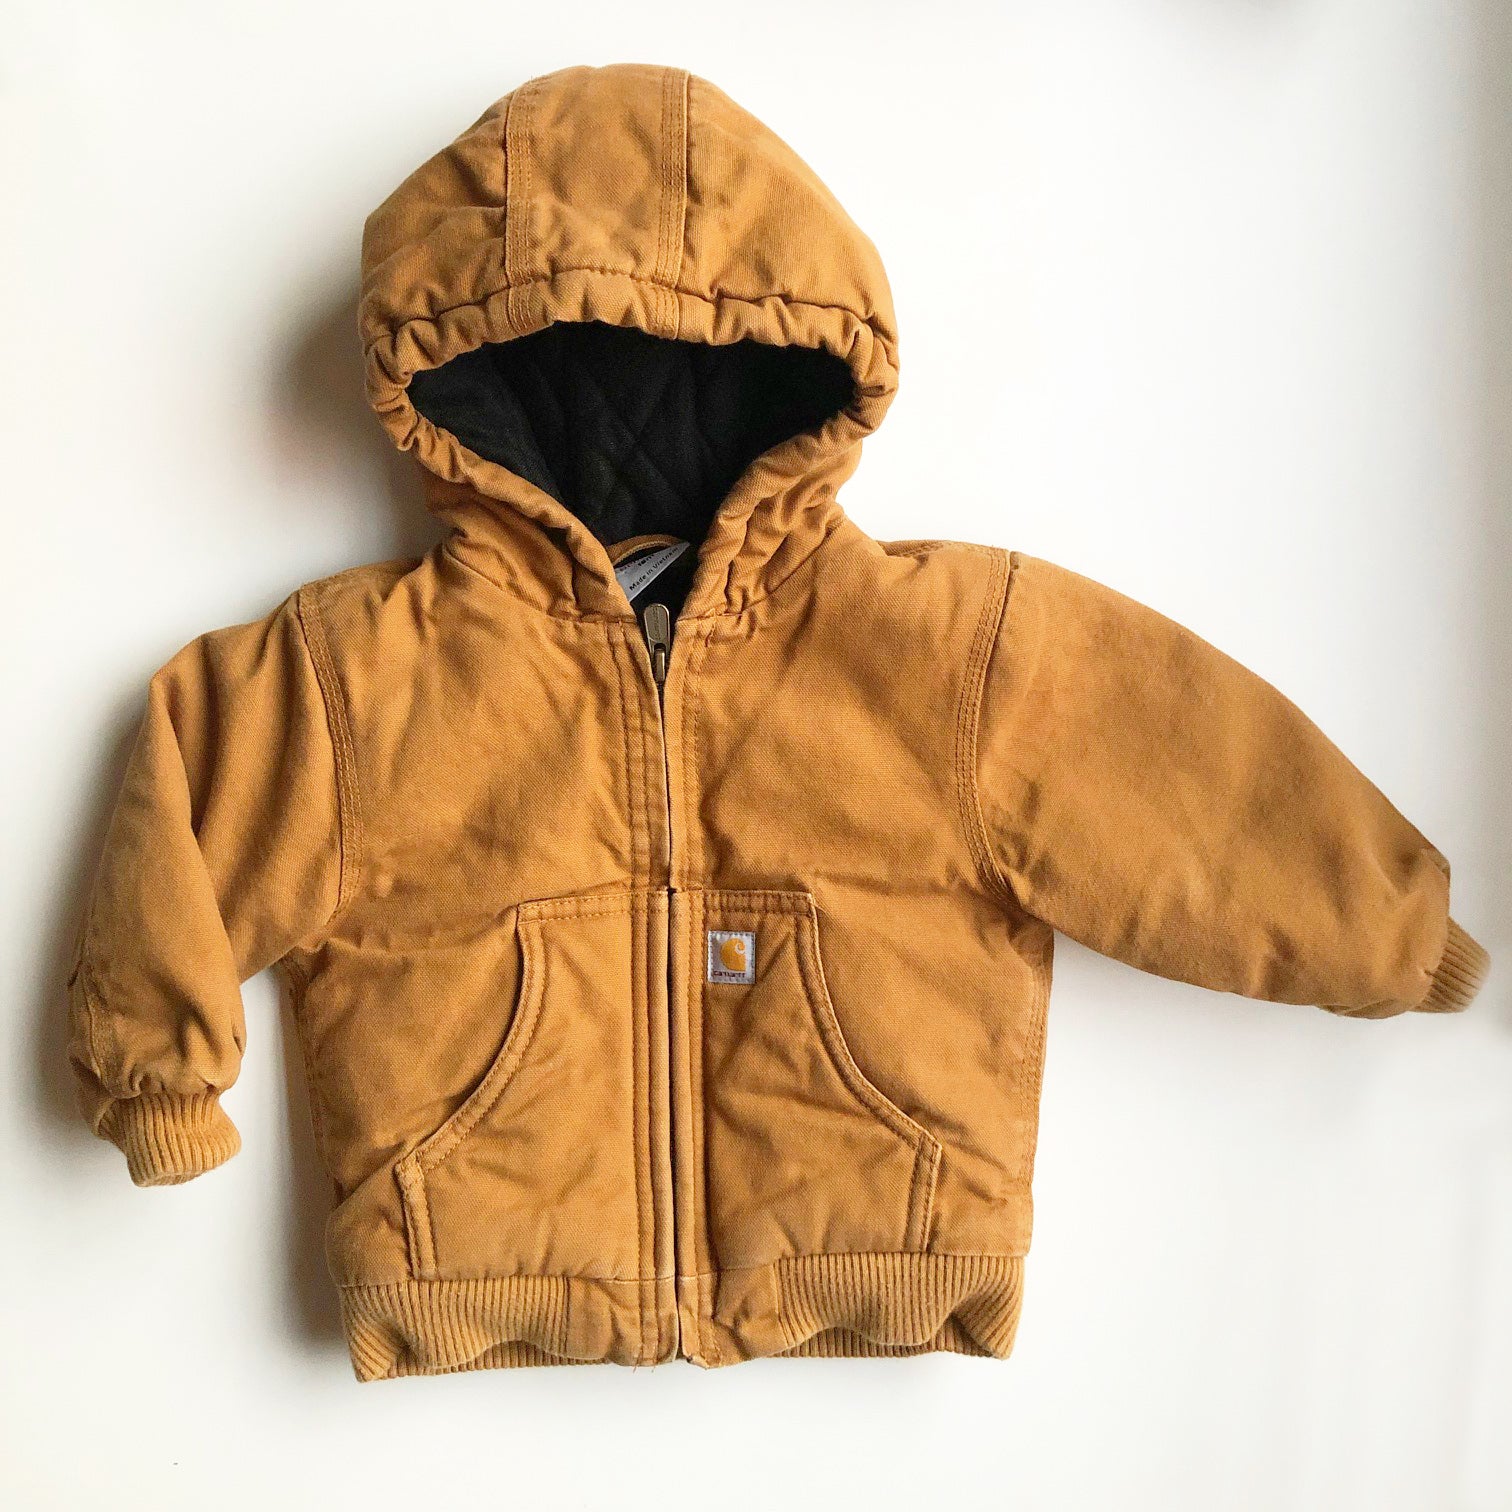 Carhartt Preloved Hooded Jacket size 18 months.